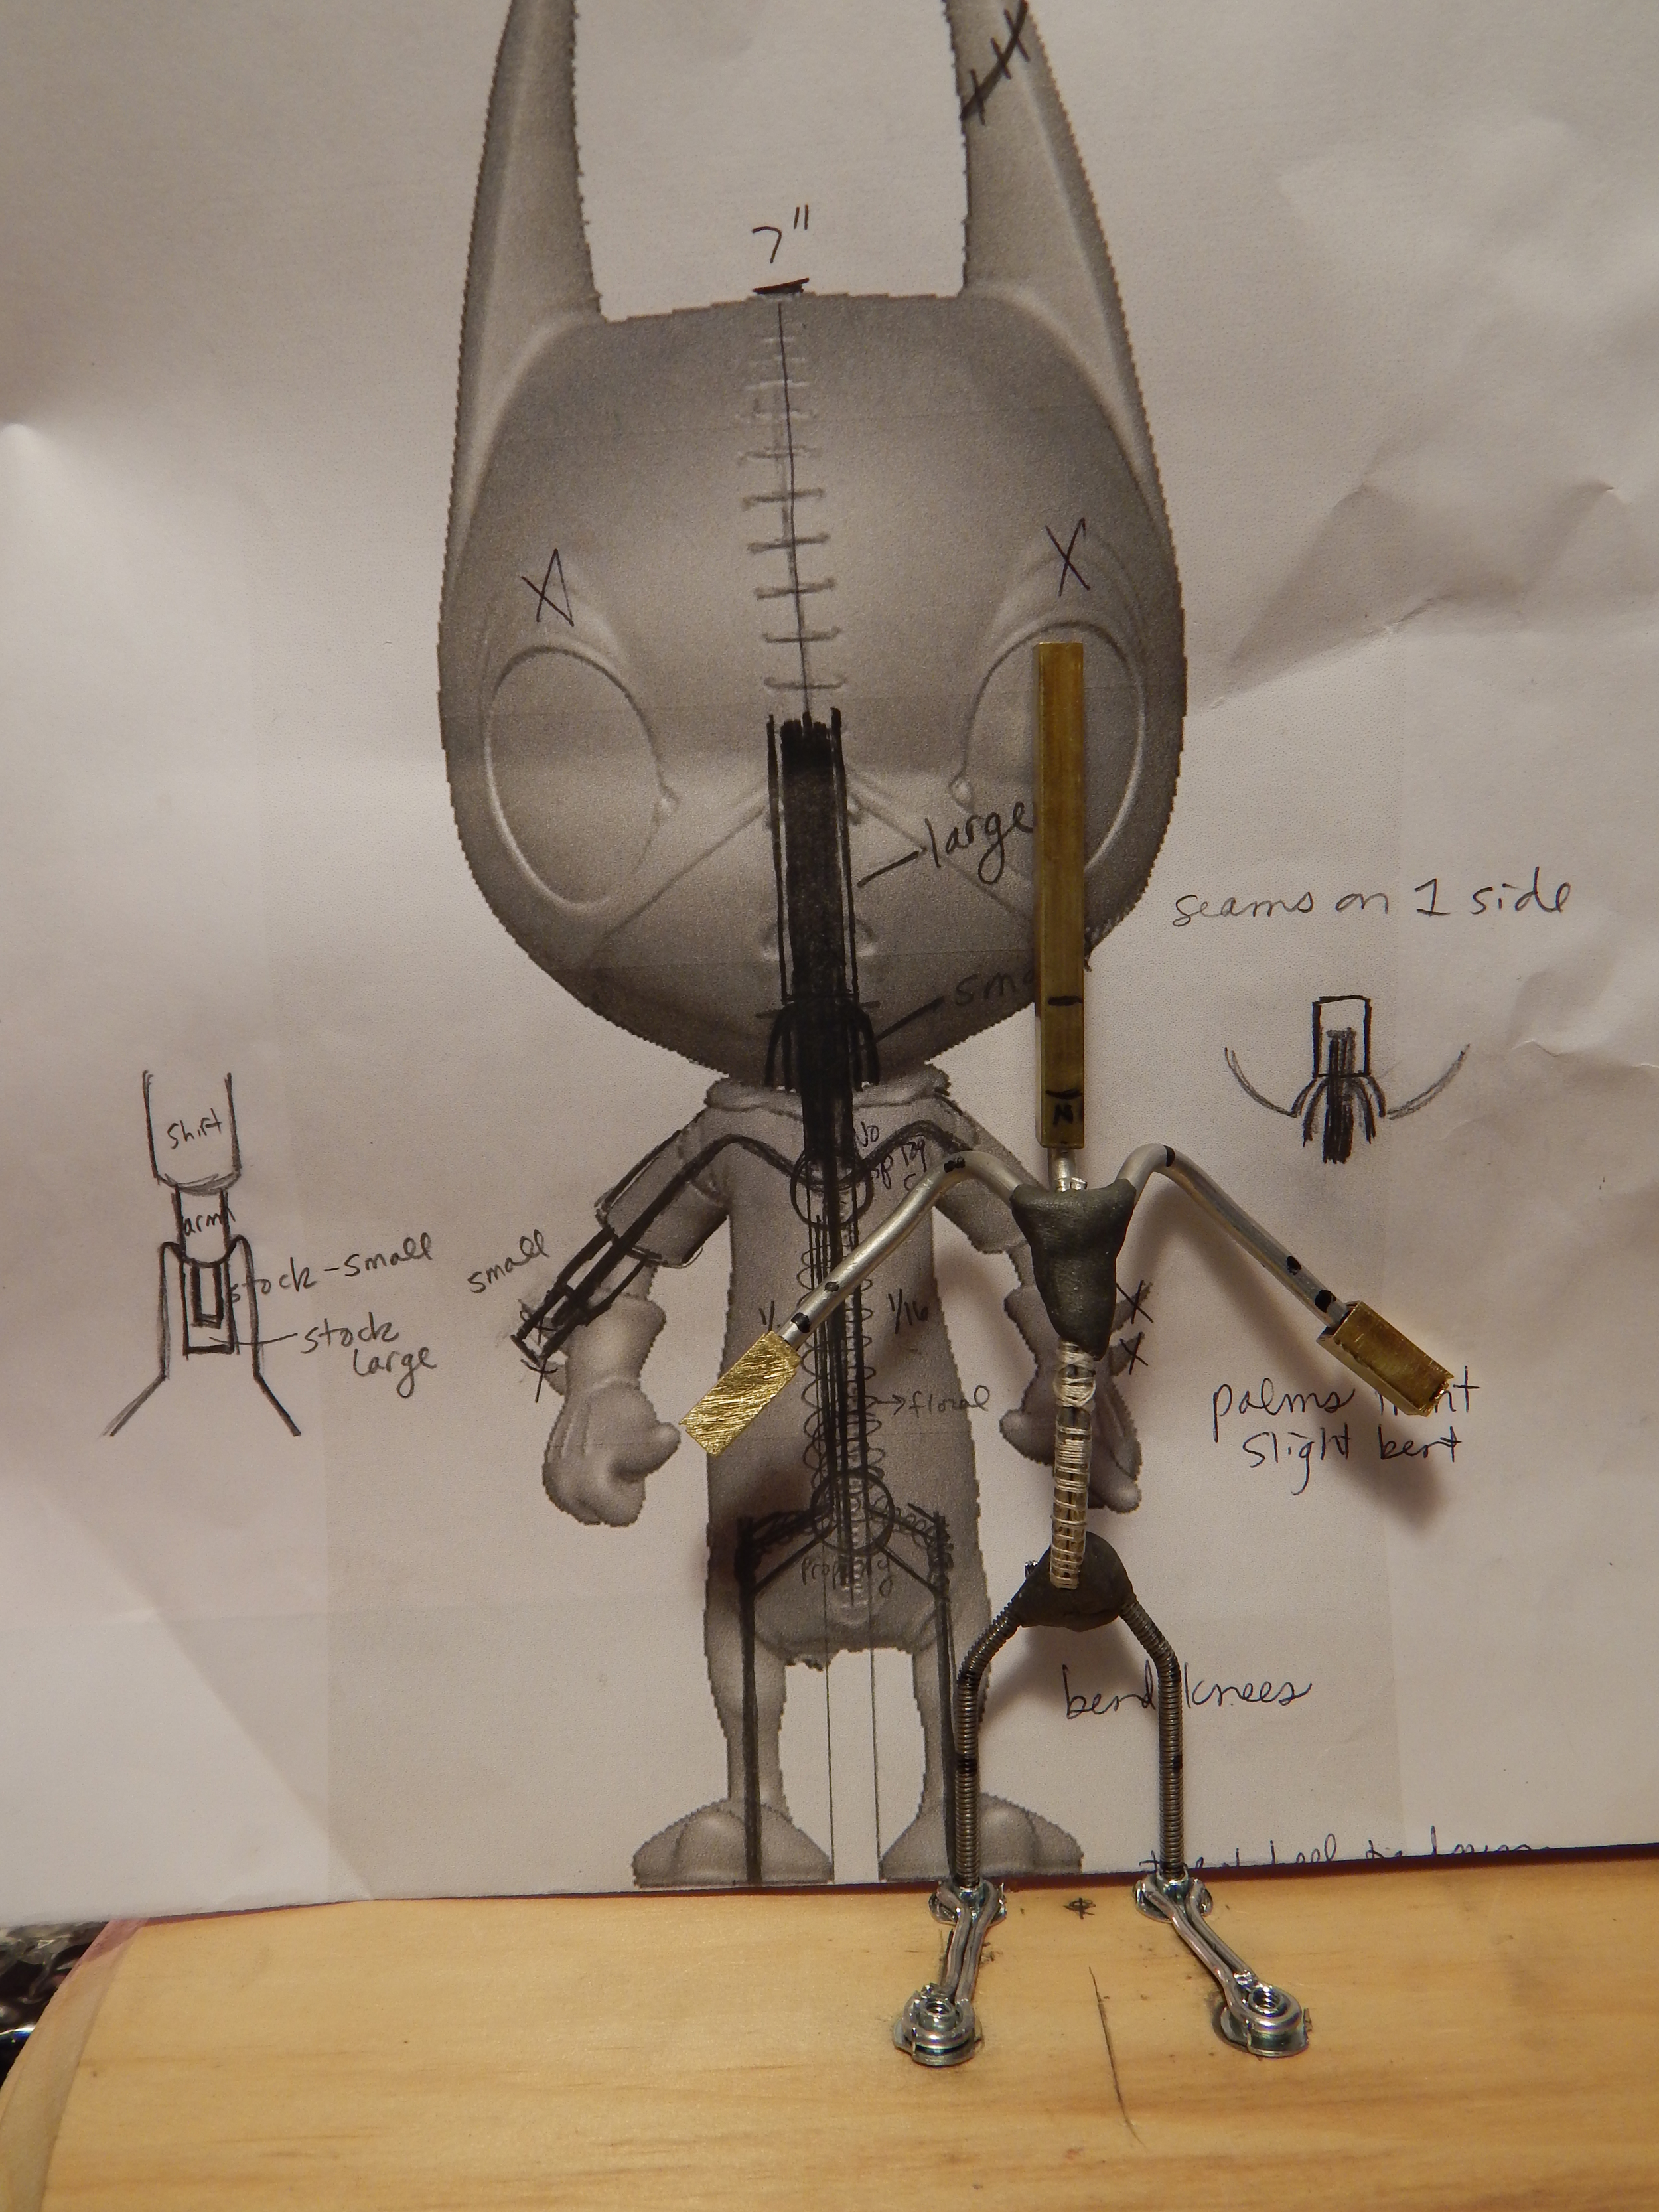   Ralf's armature (his skeleton).  